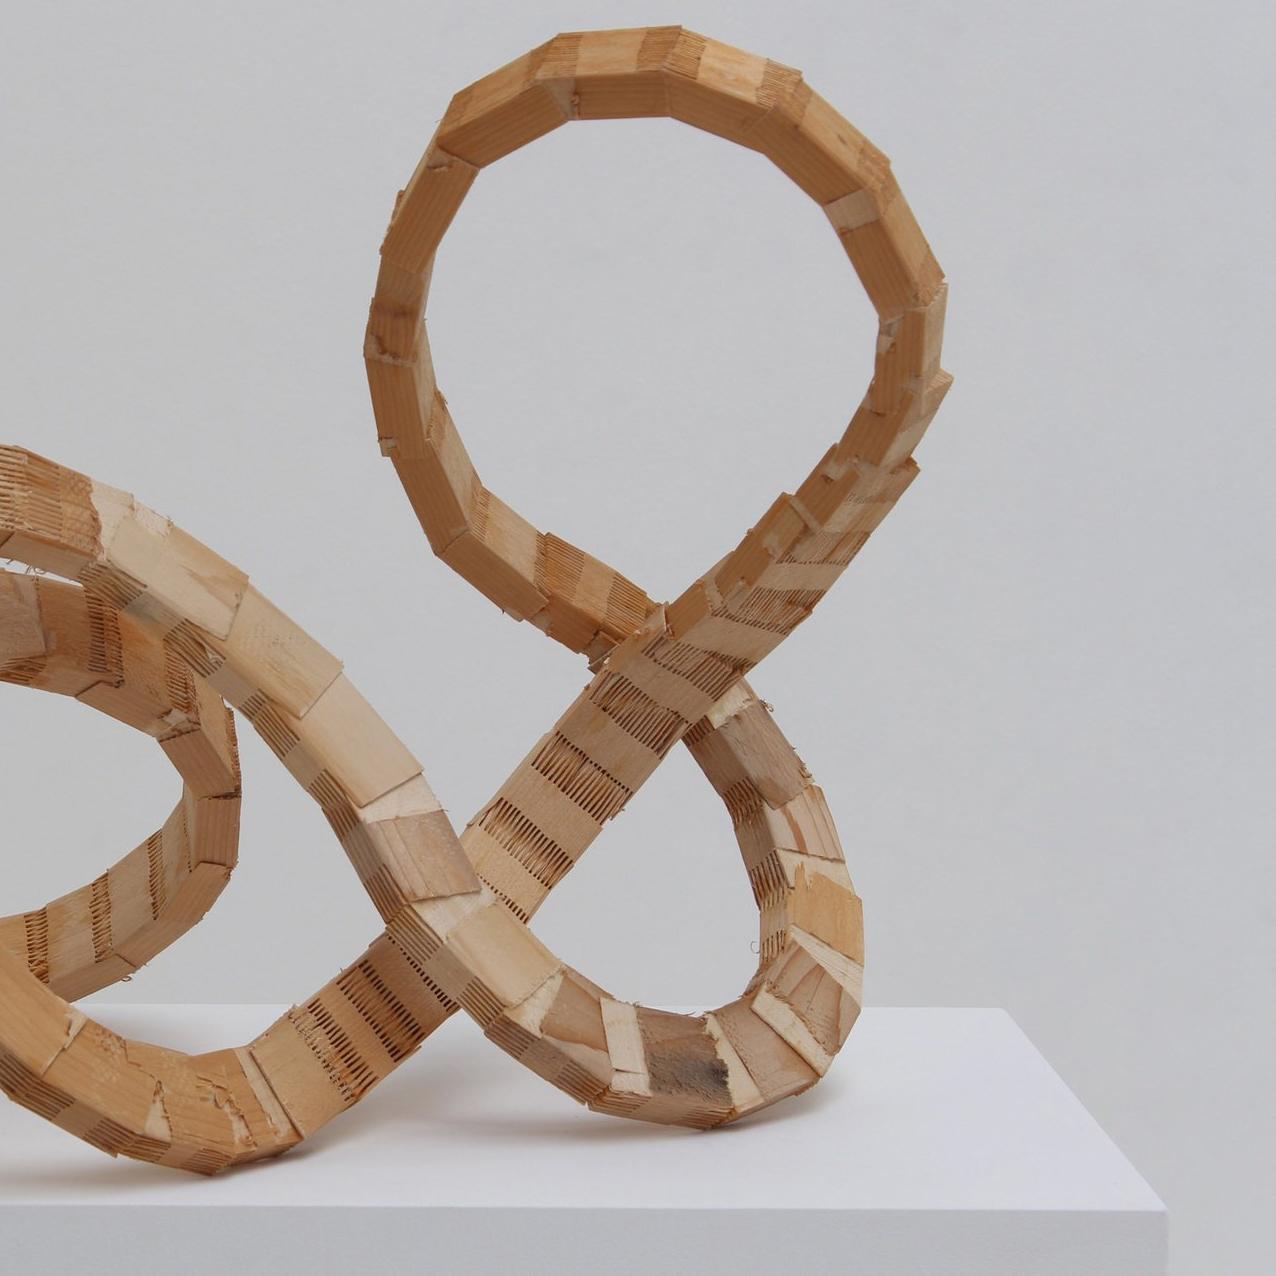 Rubber Band Sculpture - Brown Figurative Sculpture by Tim Hawkinson